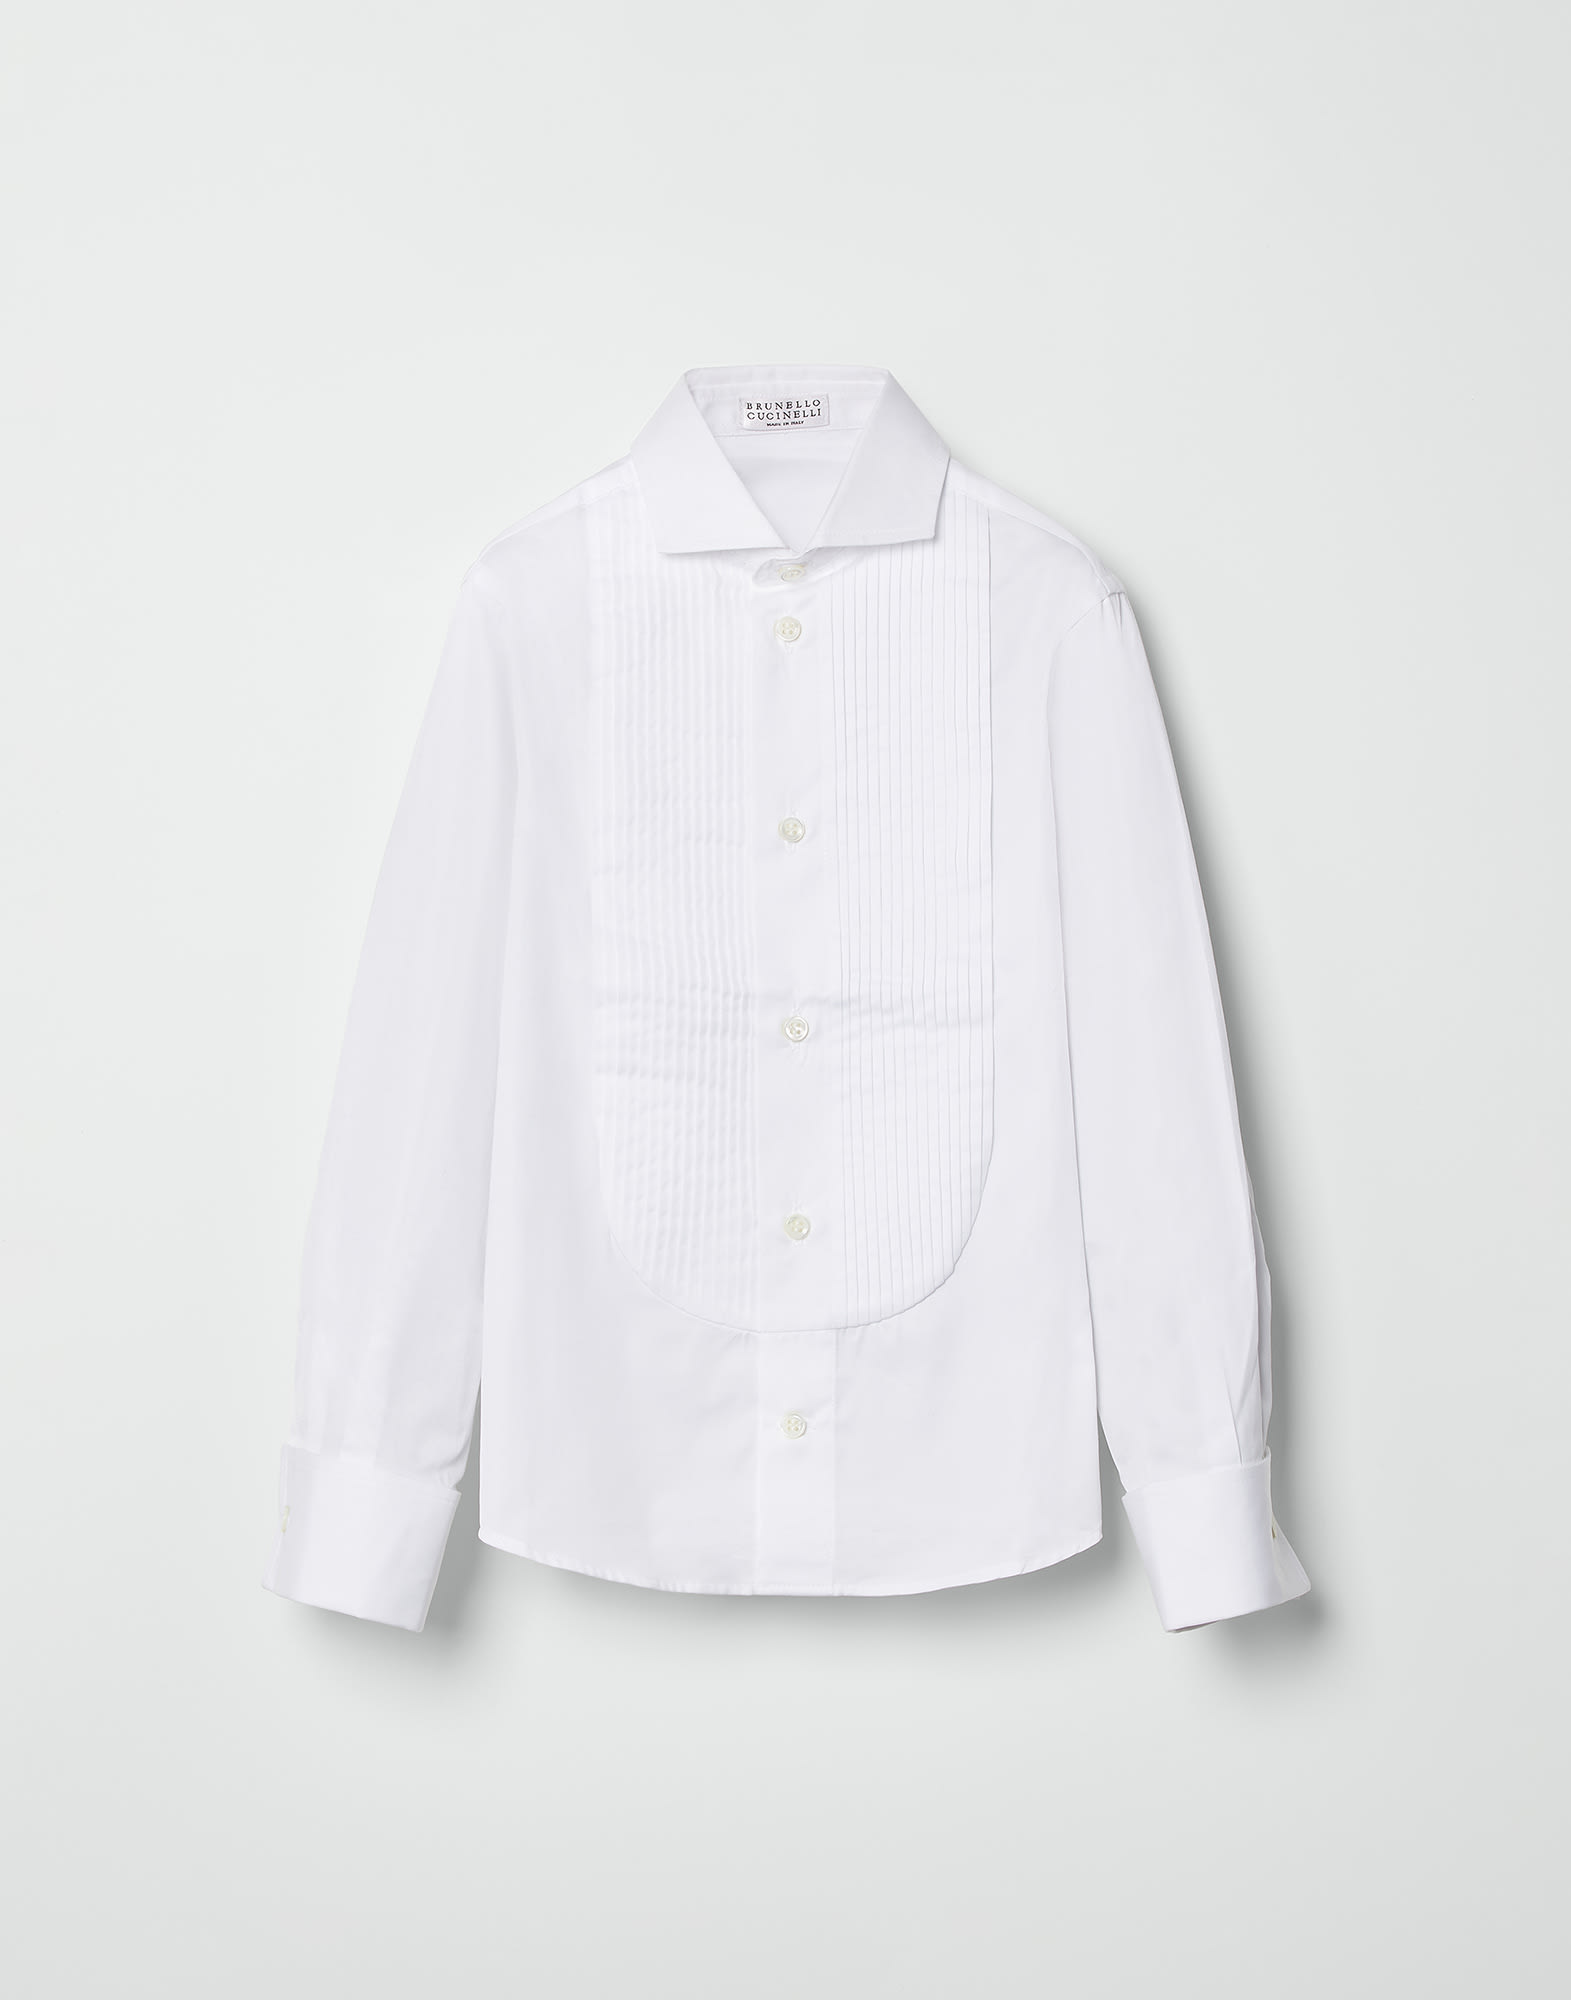 Рубашка для смокинга Белый Мальчики - Brunello Cucinelli